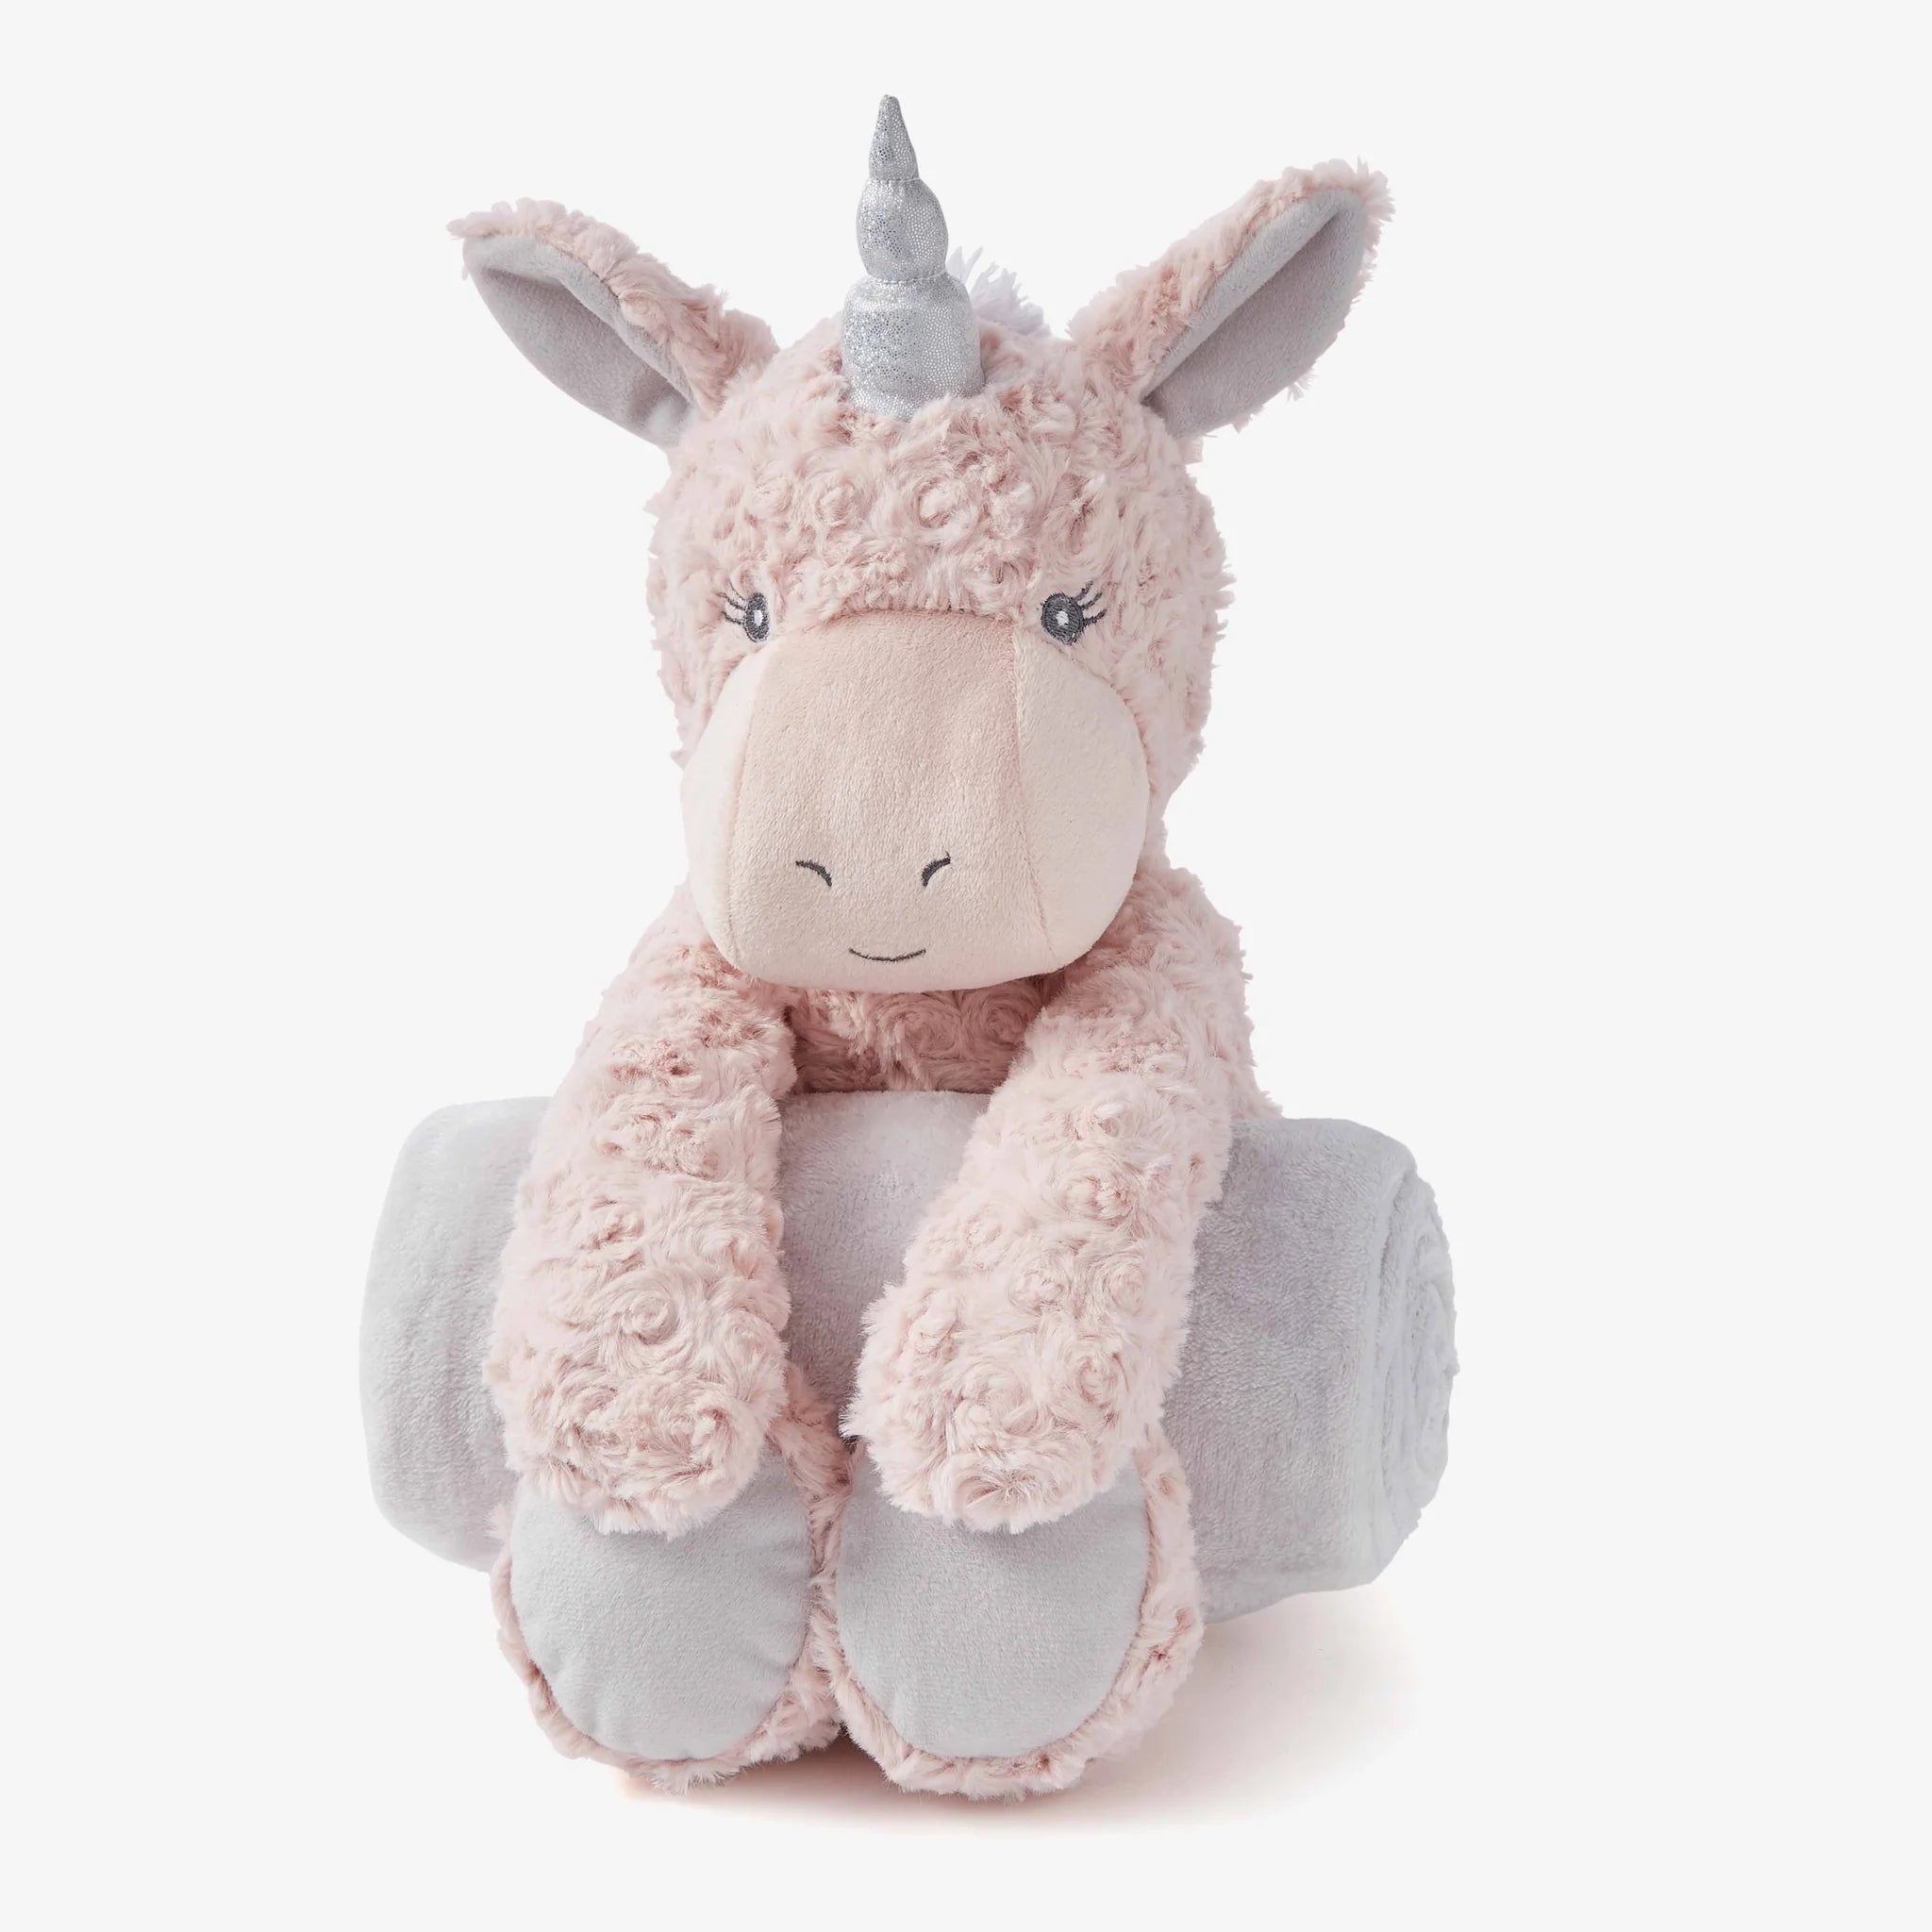 Swirl pink unicorn bedtime huggie plush toy for baby